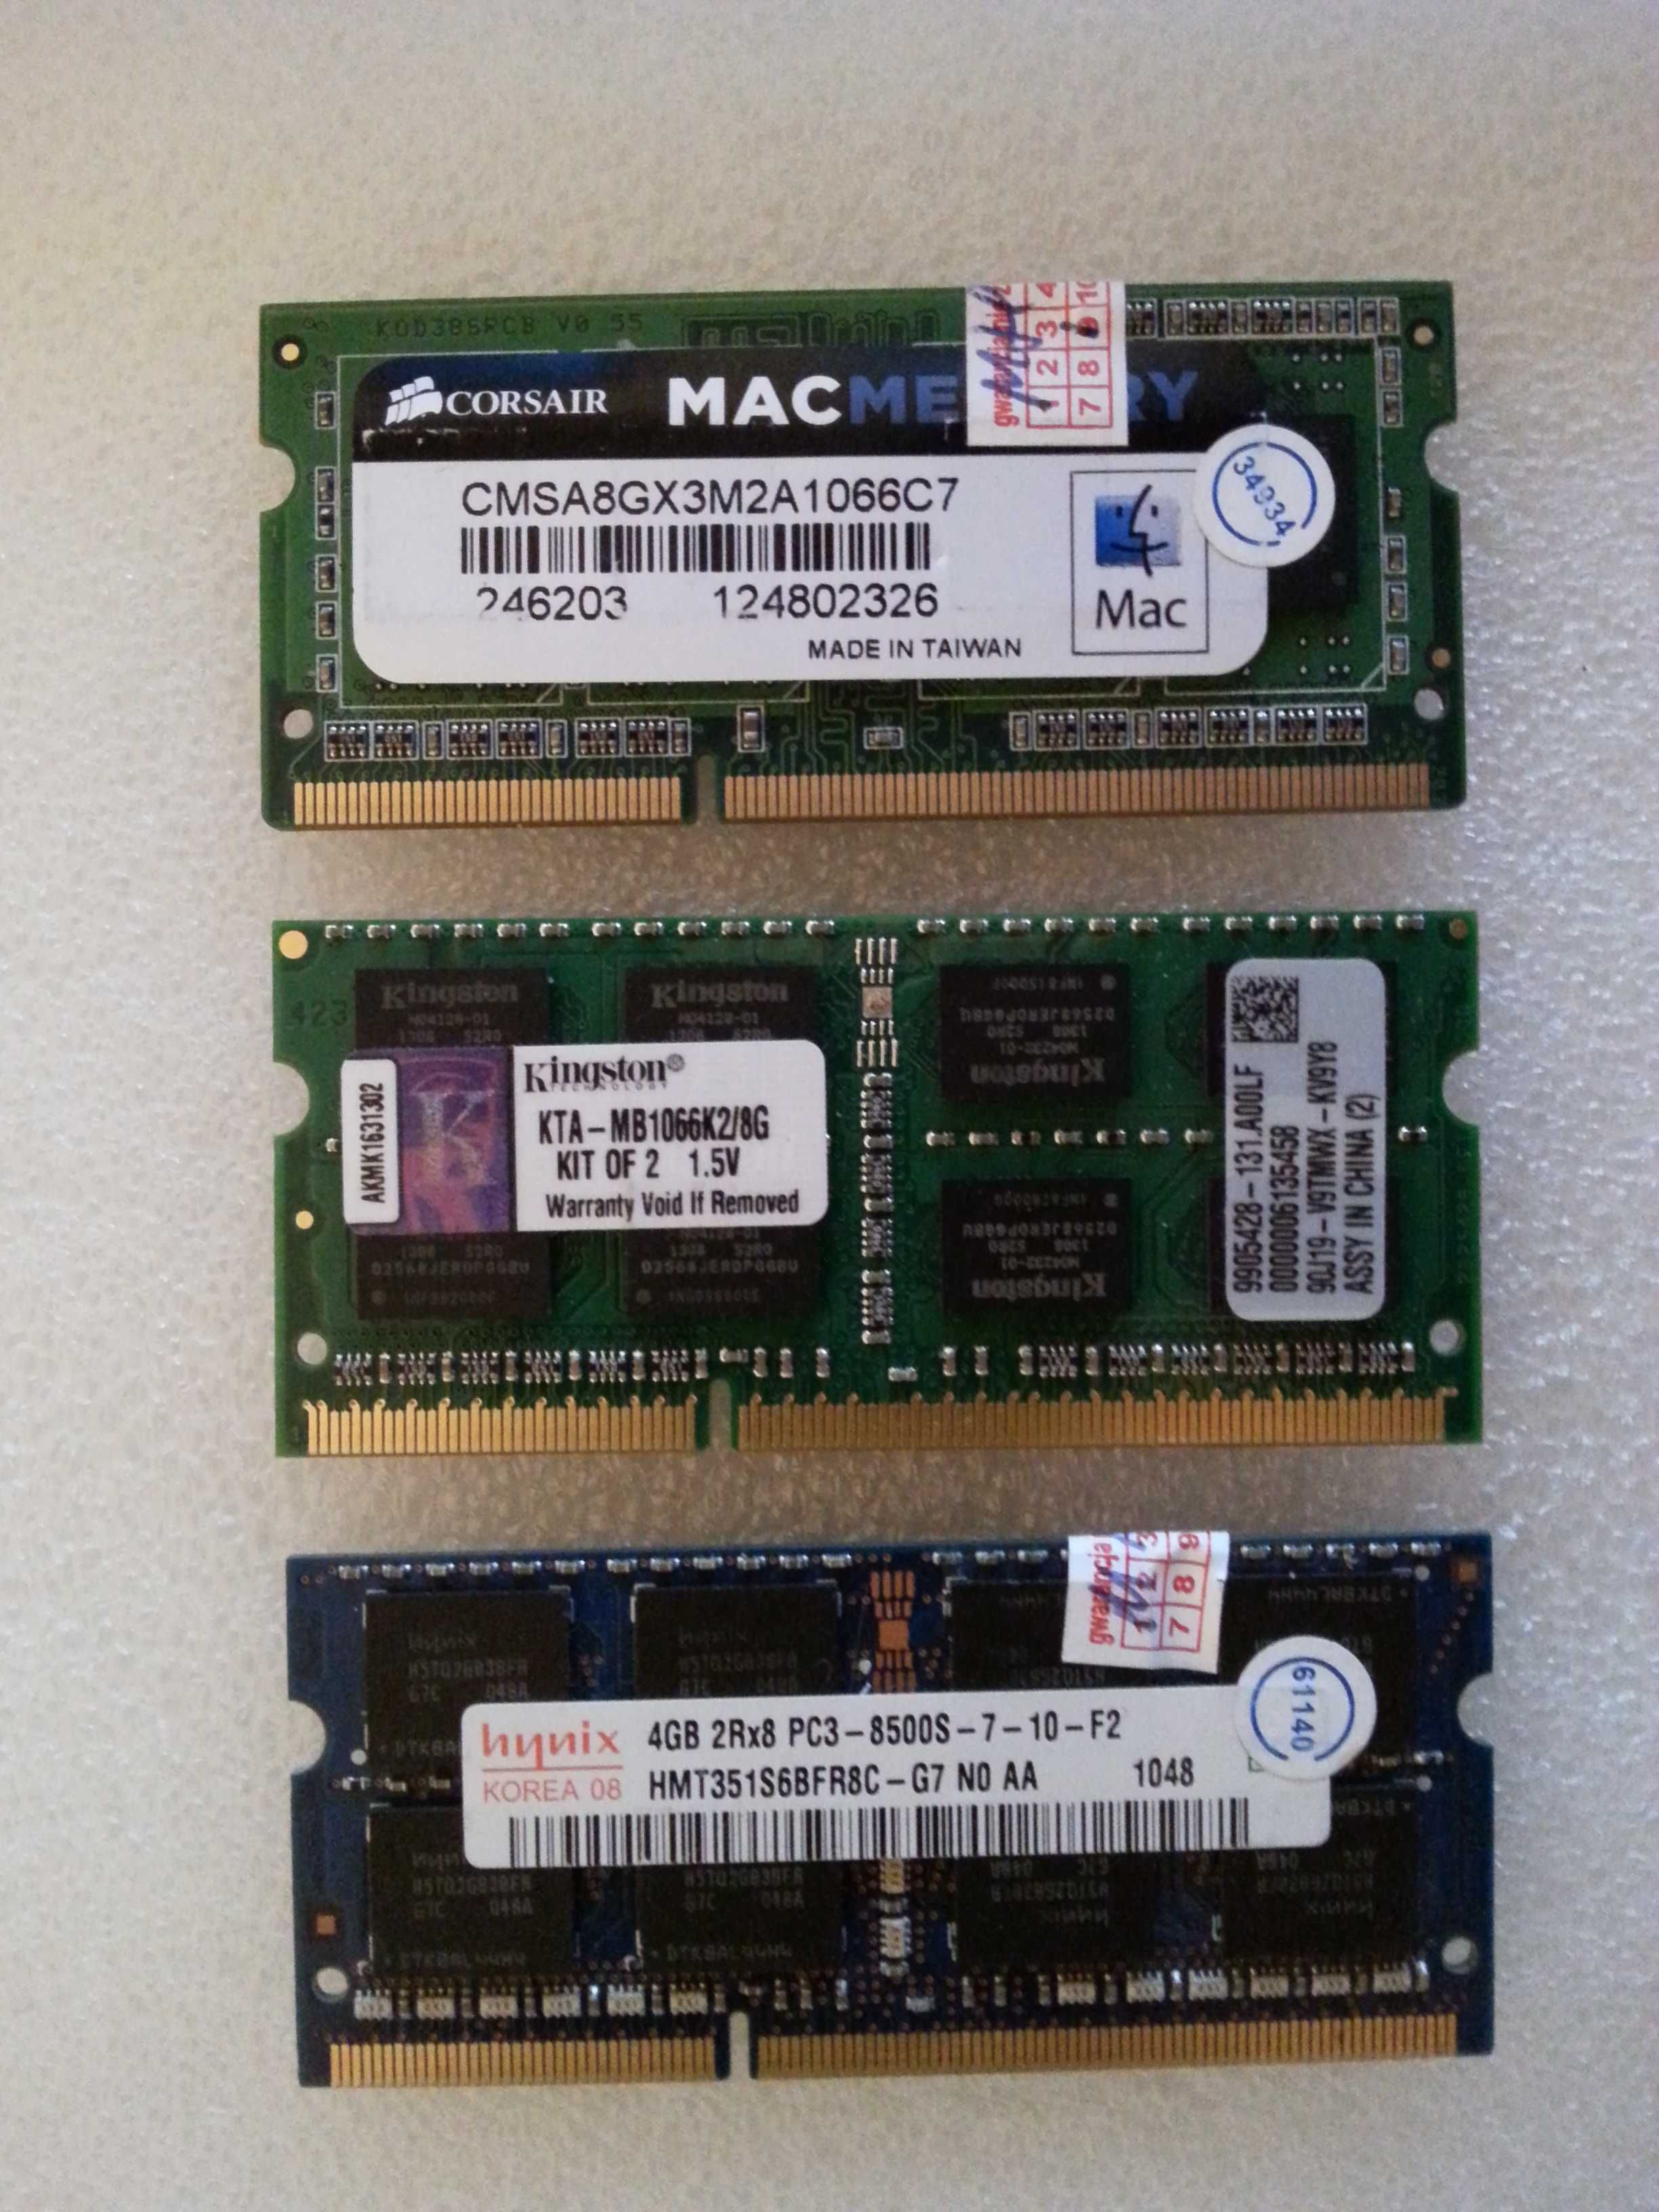 RAM-lapop-DDR2 2GB- różne modele.Inne foto-ddr3,ddr4,